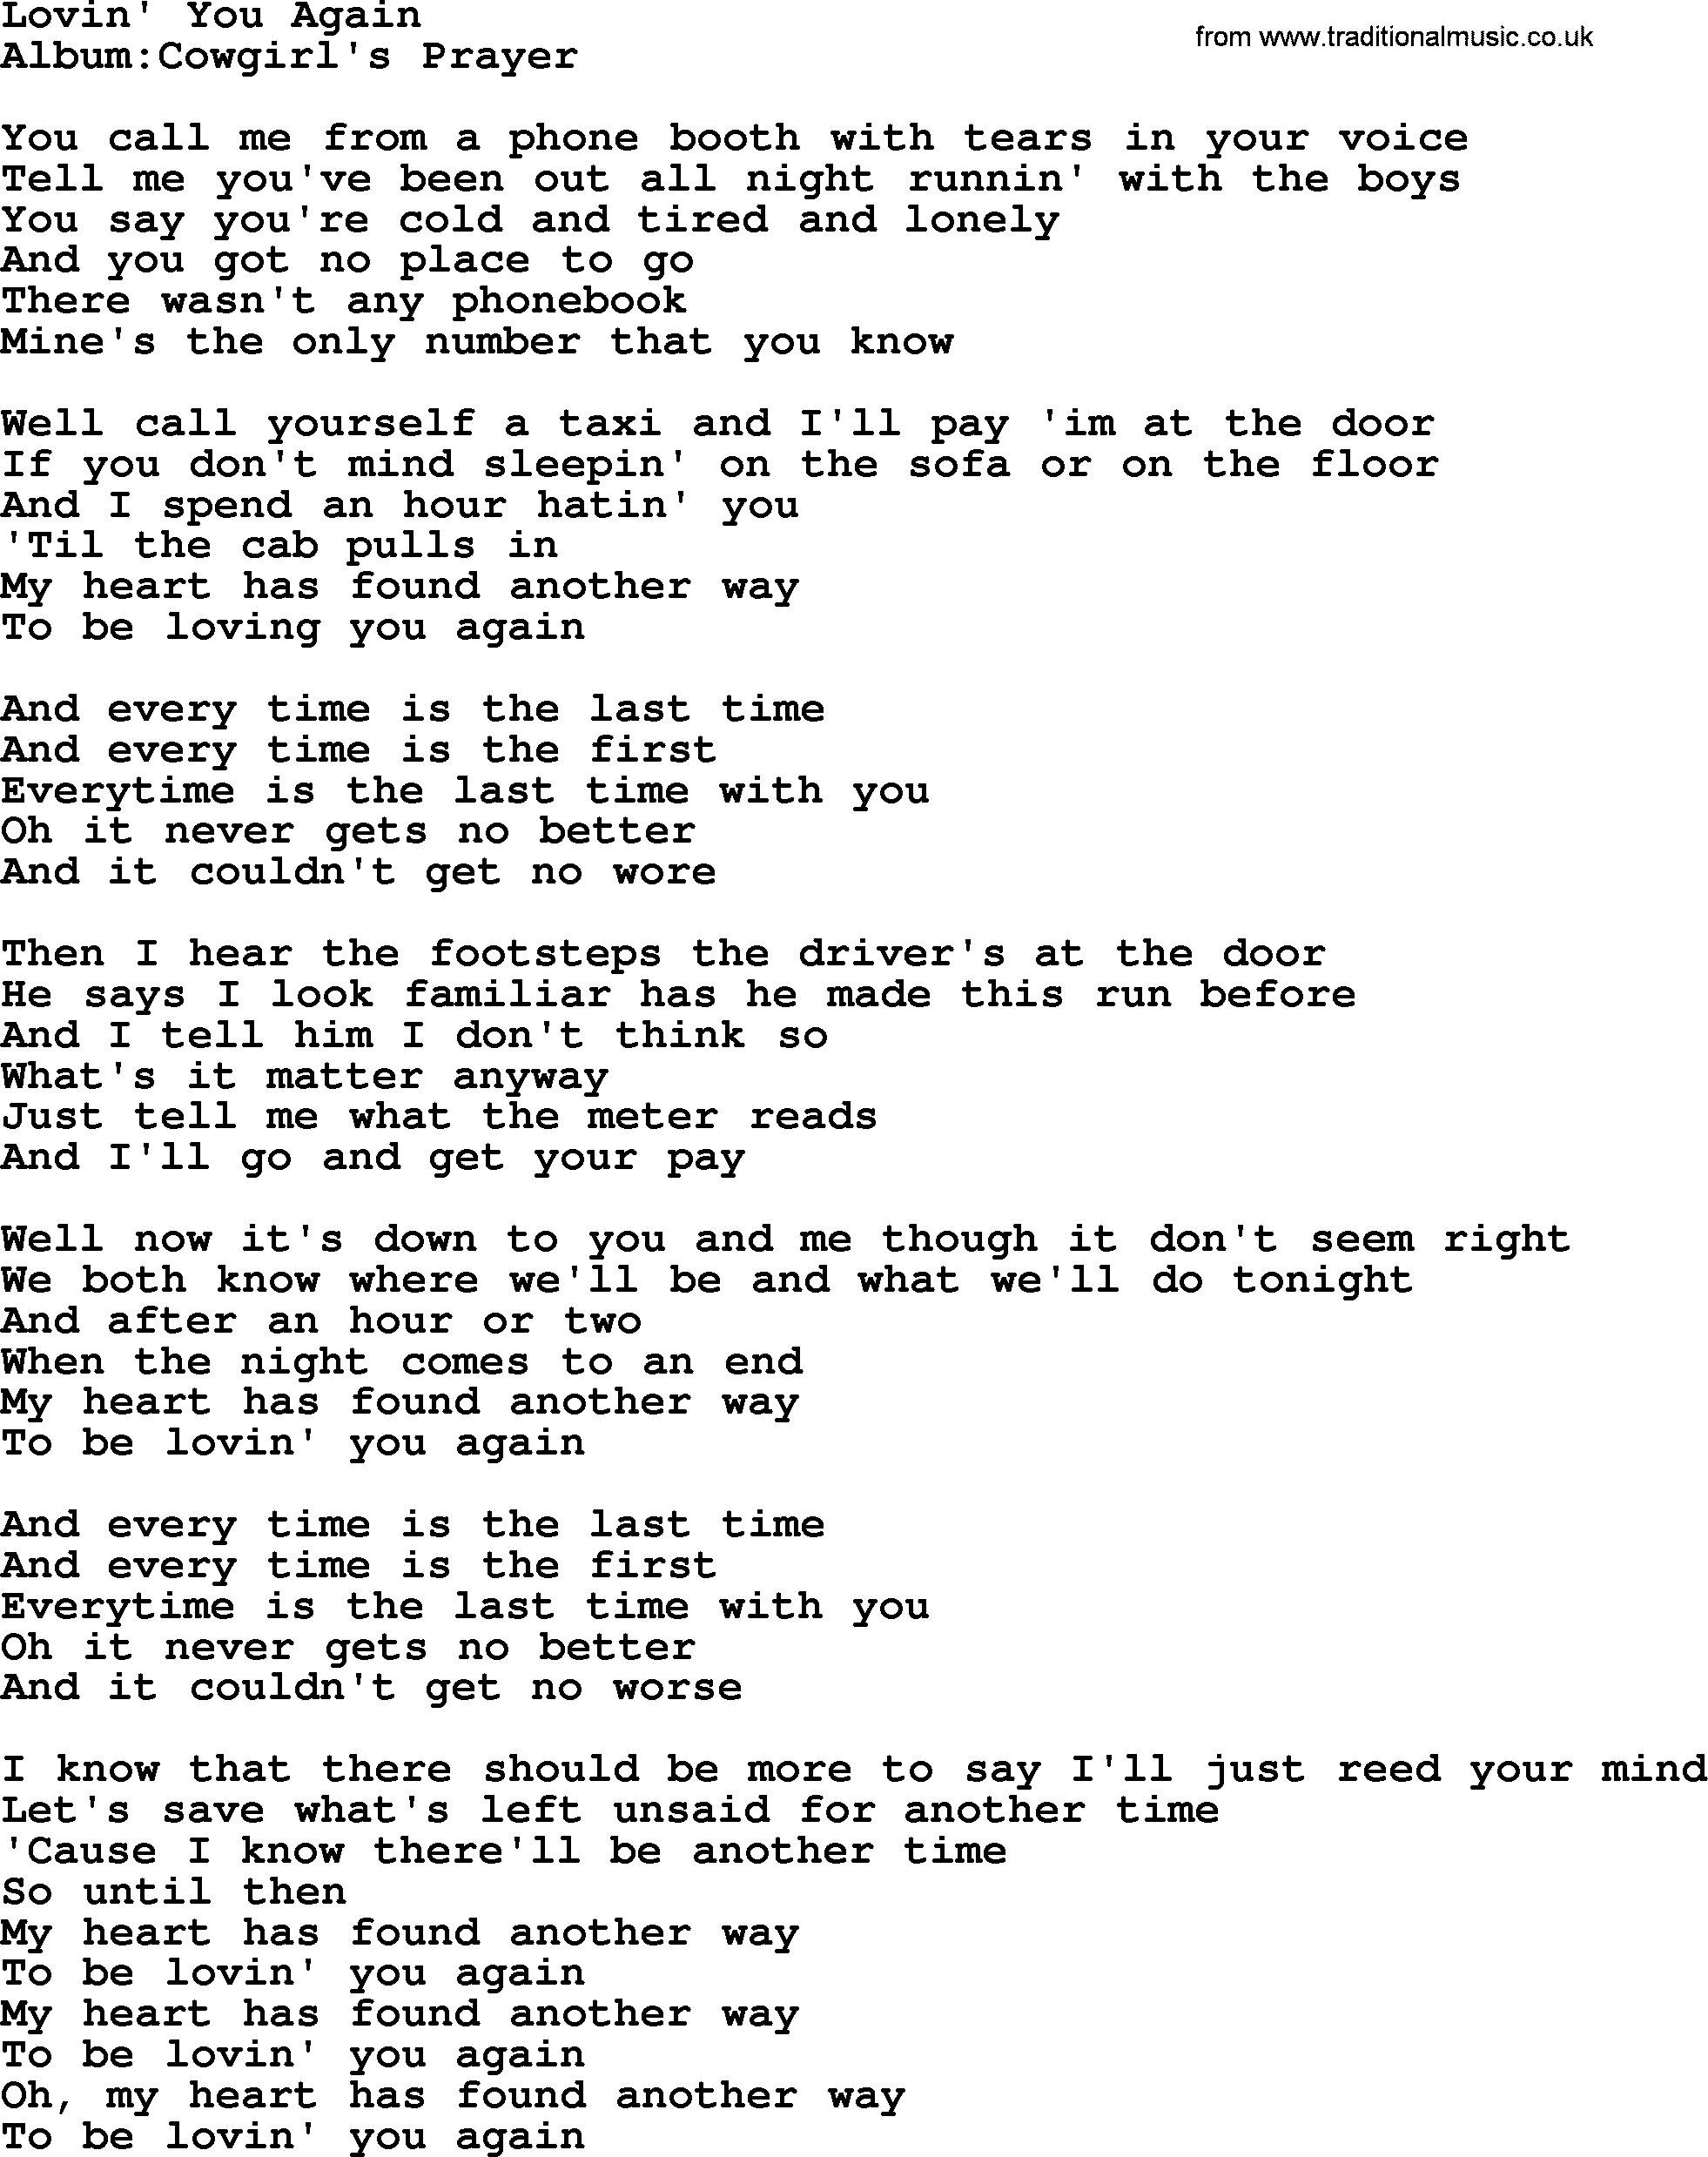 Emmylou Harris song: Lovin' You Again lyrics